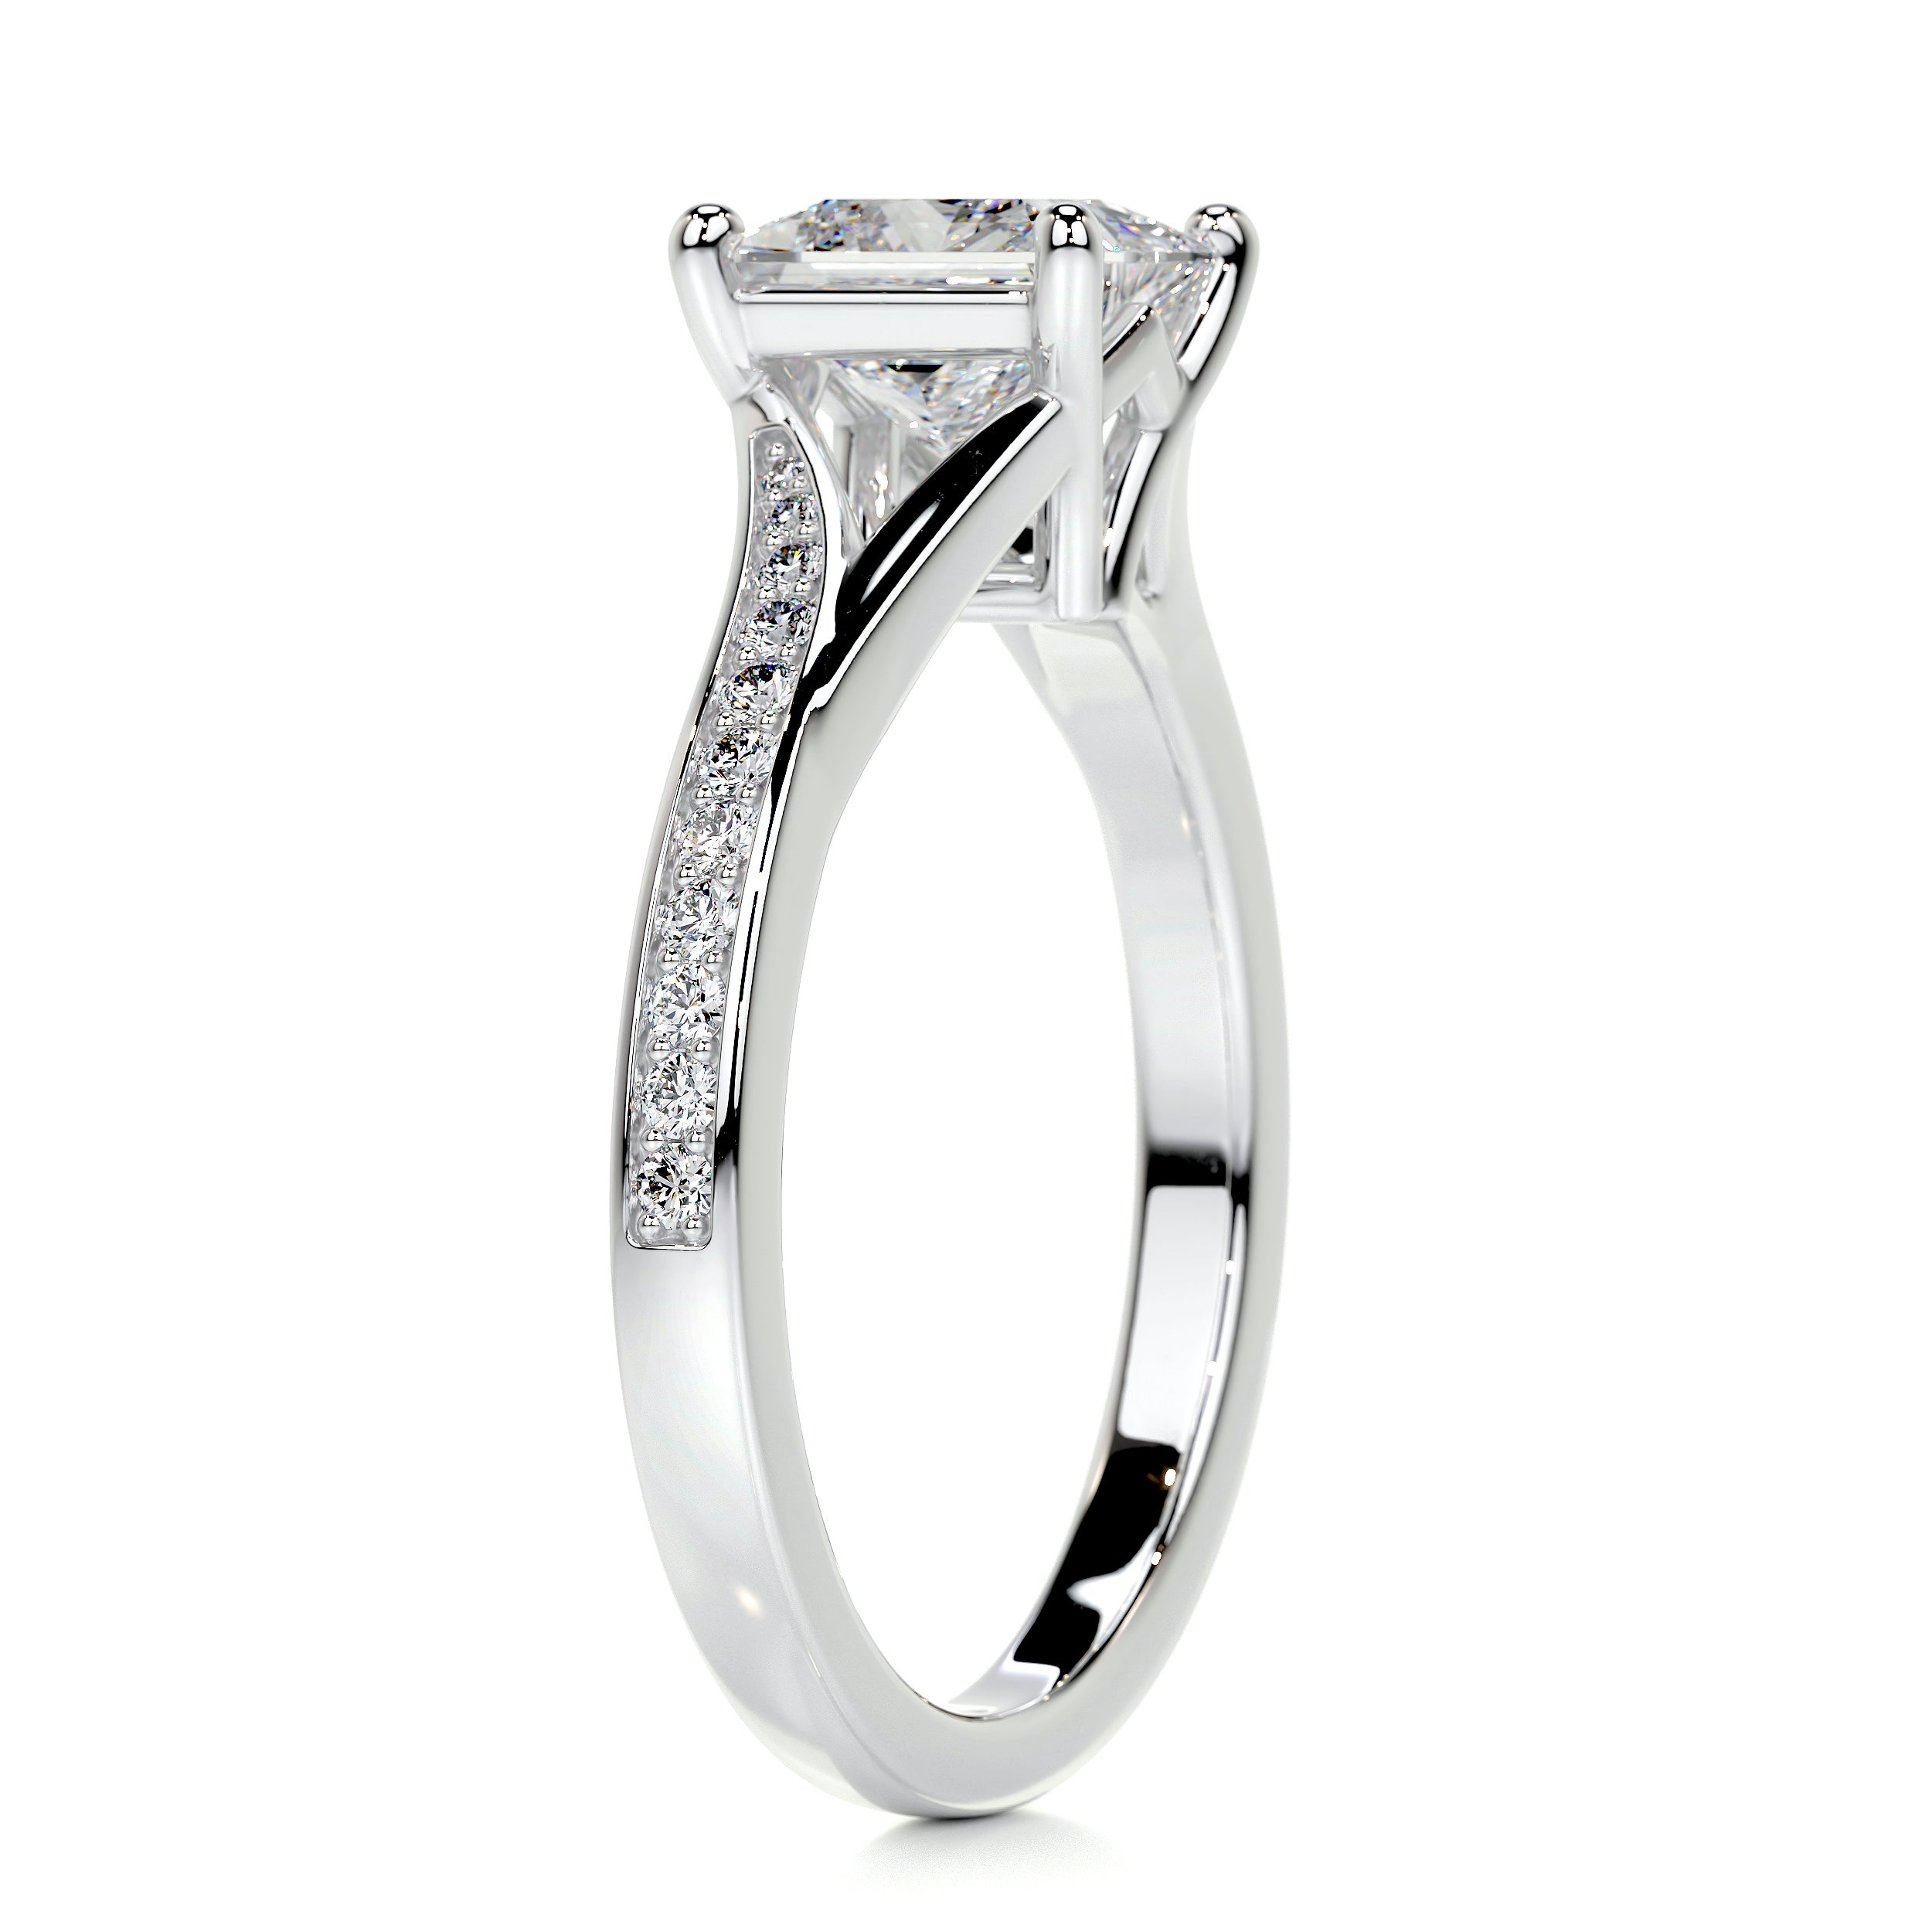 Alexandria Diamond Engagement Ring   (1.15 Carat) -18K White Gold